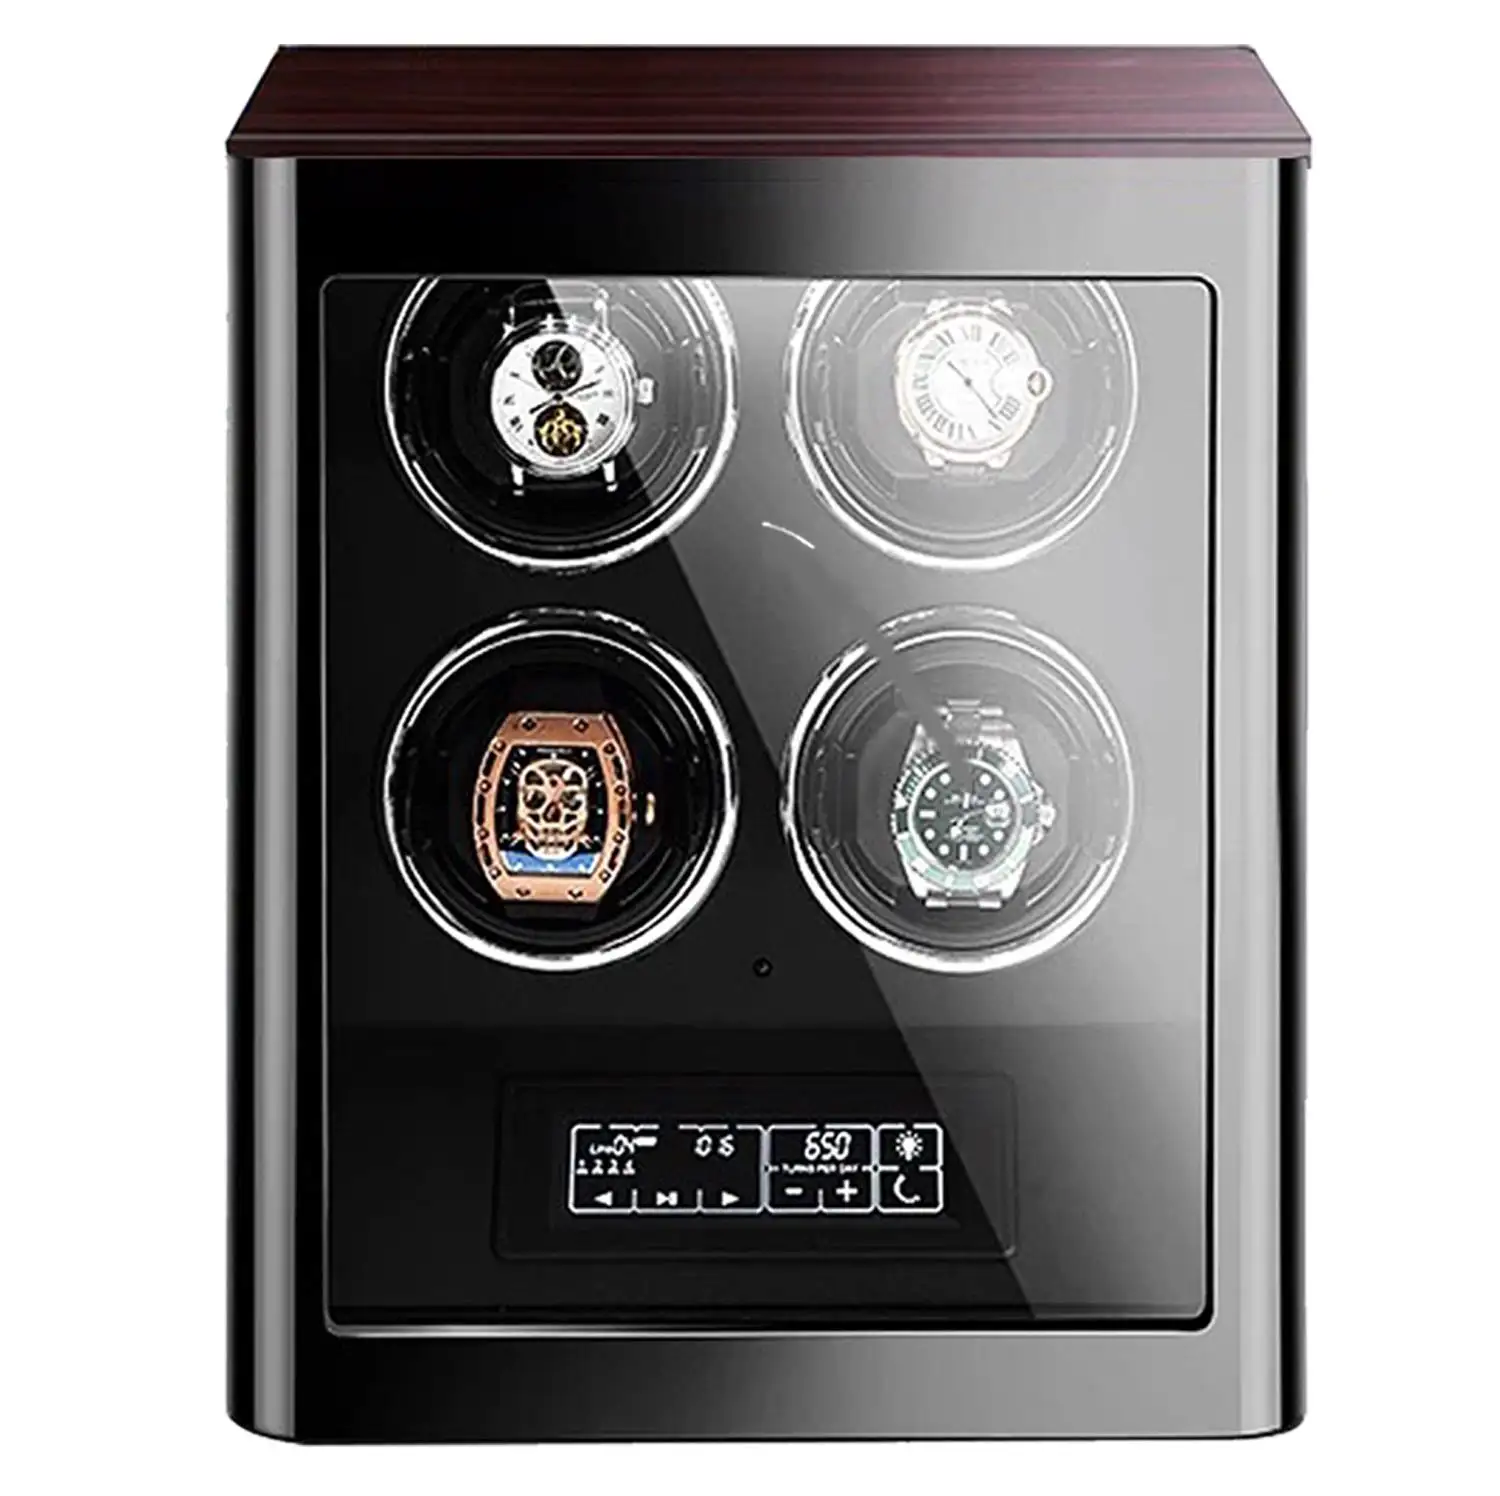 Luxury Anti-Magnetic Watch Winder with Quiet Japanese Motor, Fingerprint Unlock for Men Women Watches GC03-Q85EB-L-ARF